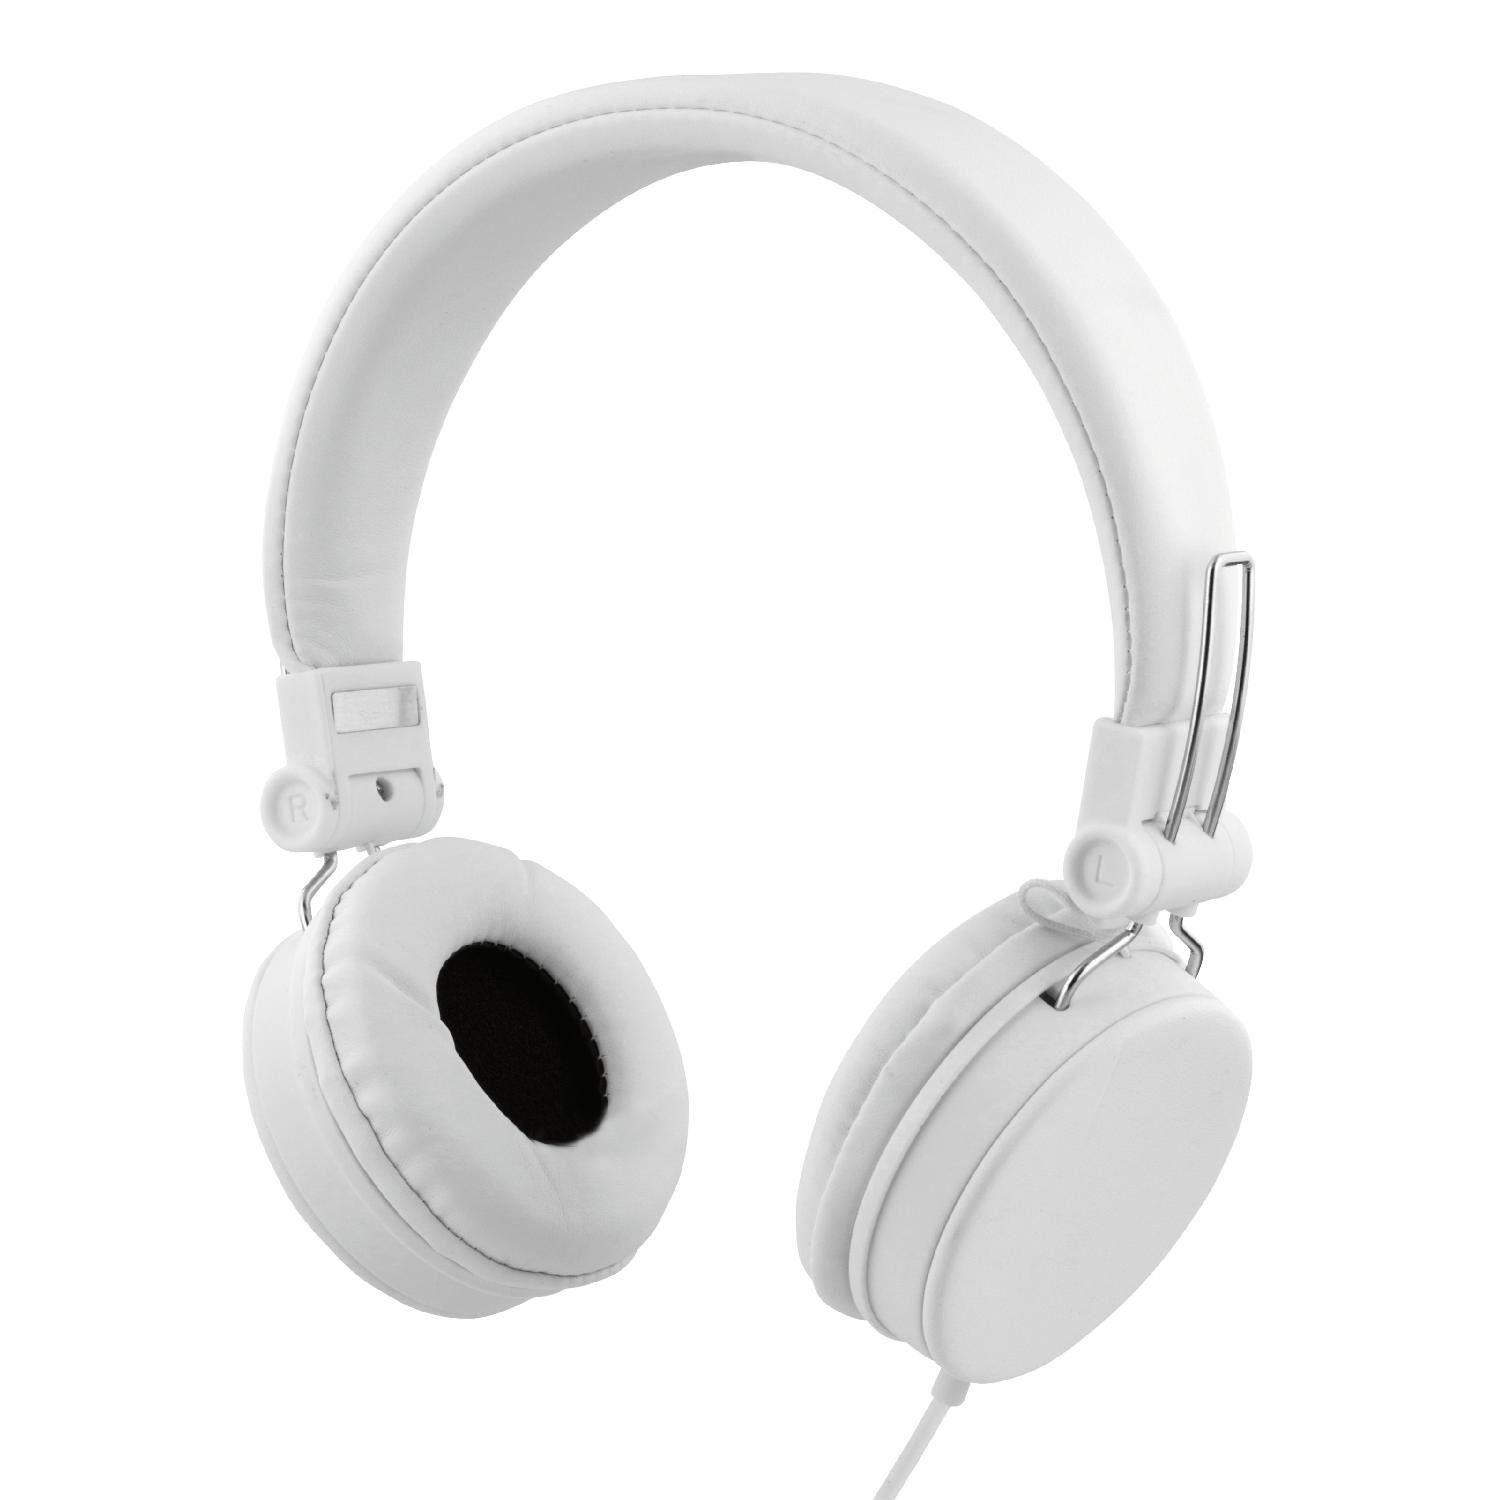 STREETZ Kopfhörer 1,2m Kabel 3.5mm Klinkenanschluss Ohrpolster On-Ear-Kopfhörer (integriertes Mikrofon, faltbares Headset, inkl. 5 Jahre Herstellergarantie) weiß